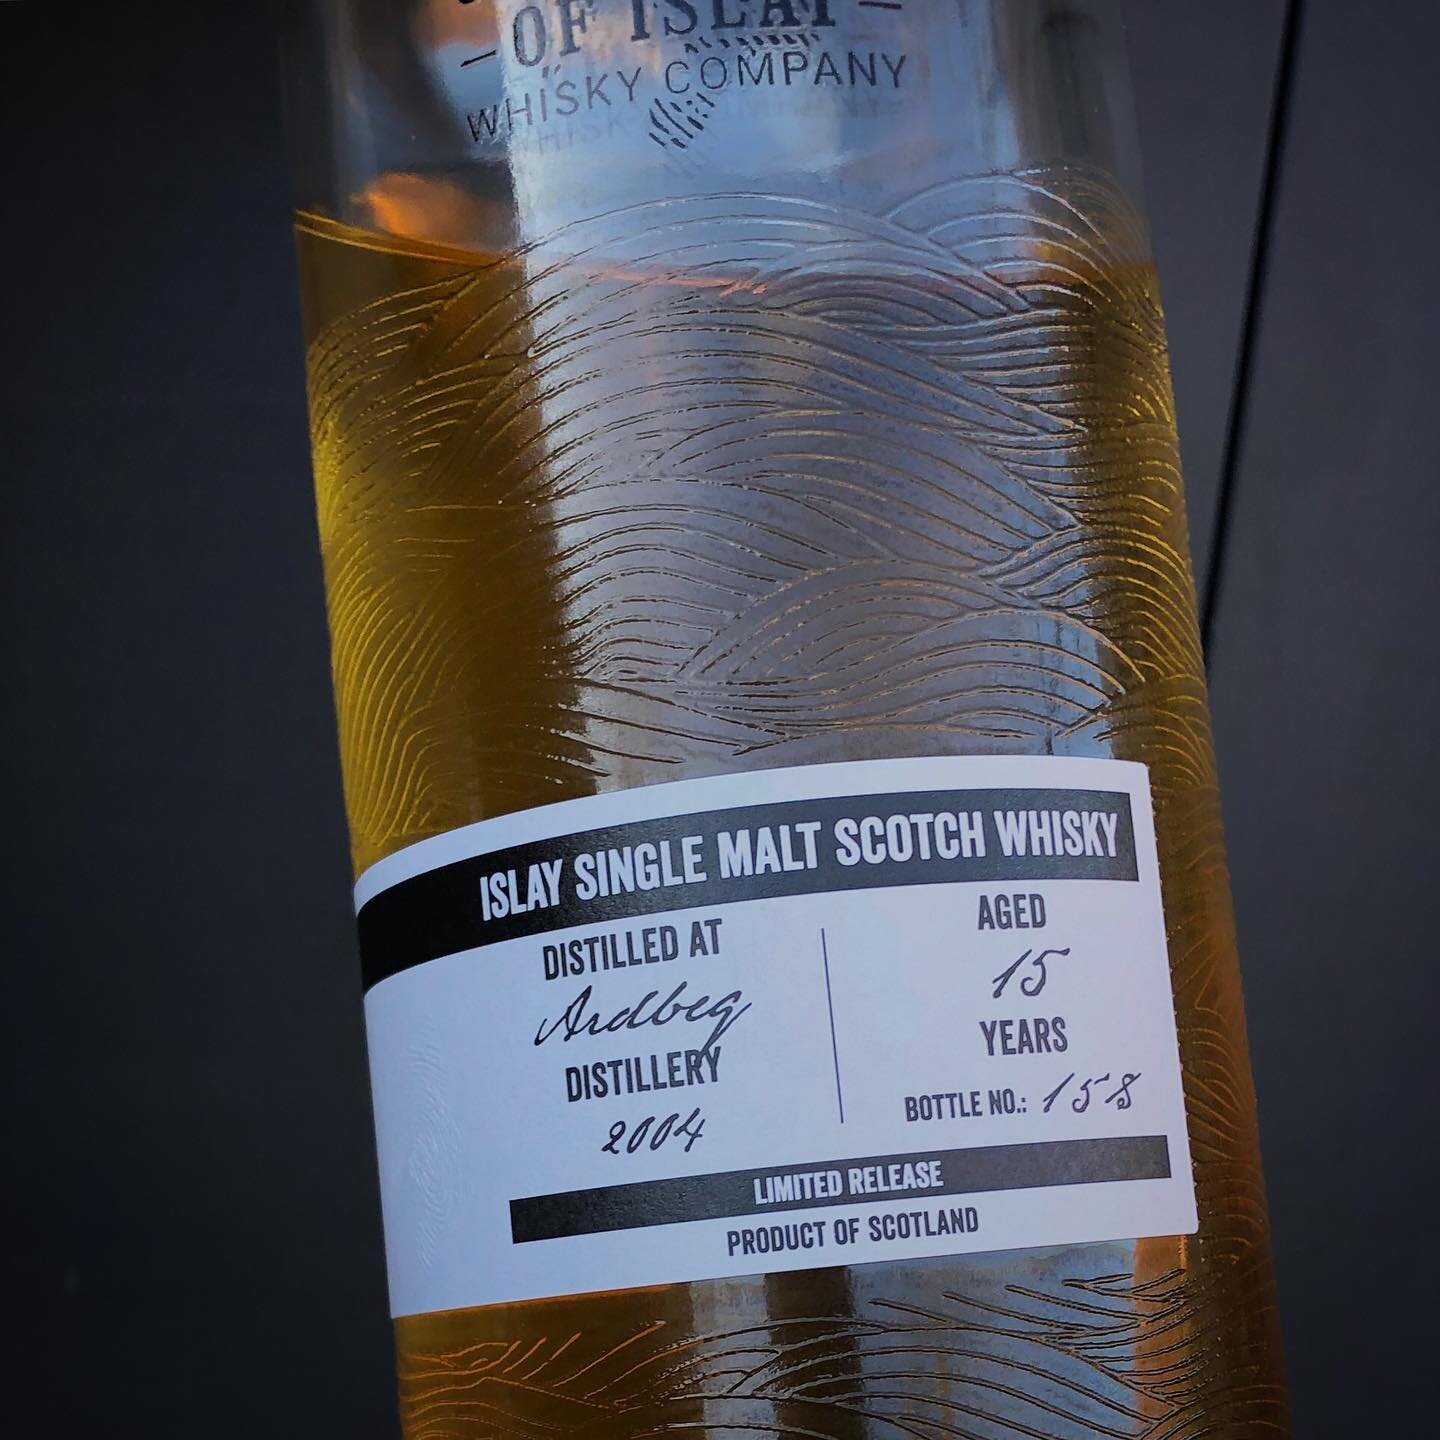 Delicious ashy clean lemony 2004 Ardbeg. Bottle opened by @malternativebelgium 🙌🏻
.
.
#ardbeg #ardbegwhisky #ardbegdistillery #peatedwhisky #peatywhisky #islaysinglemalt #islaywhisky #whisky #whiskylover #whiskygram #thecharacterofislay #thecharact